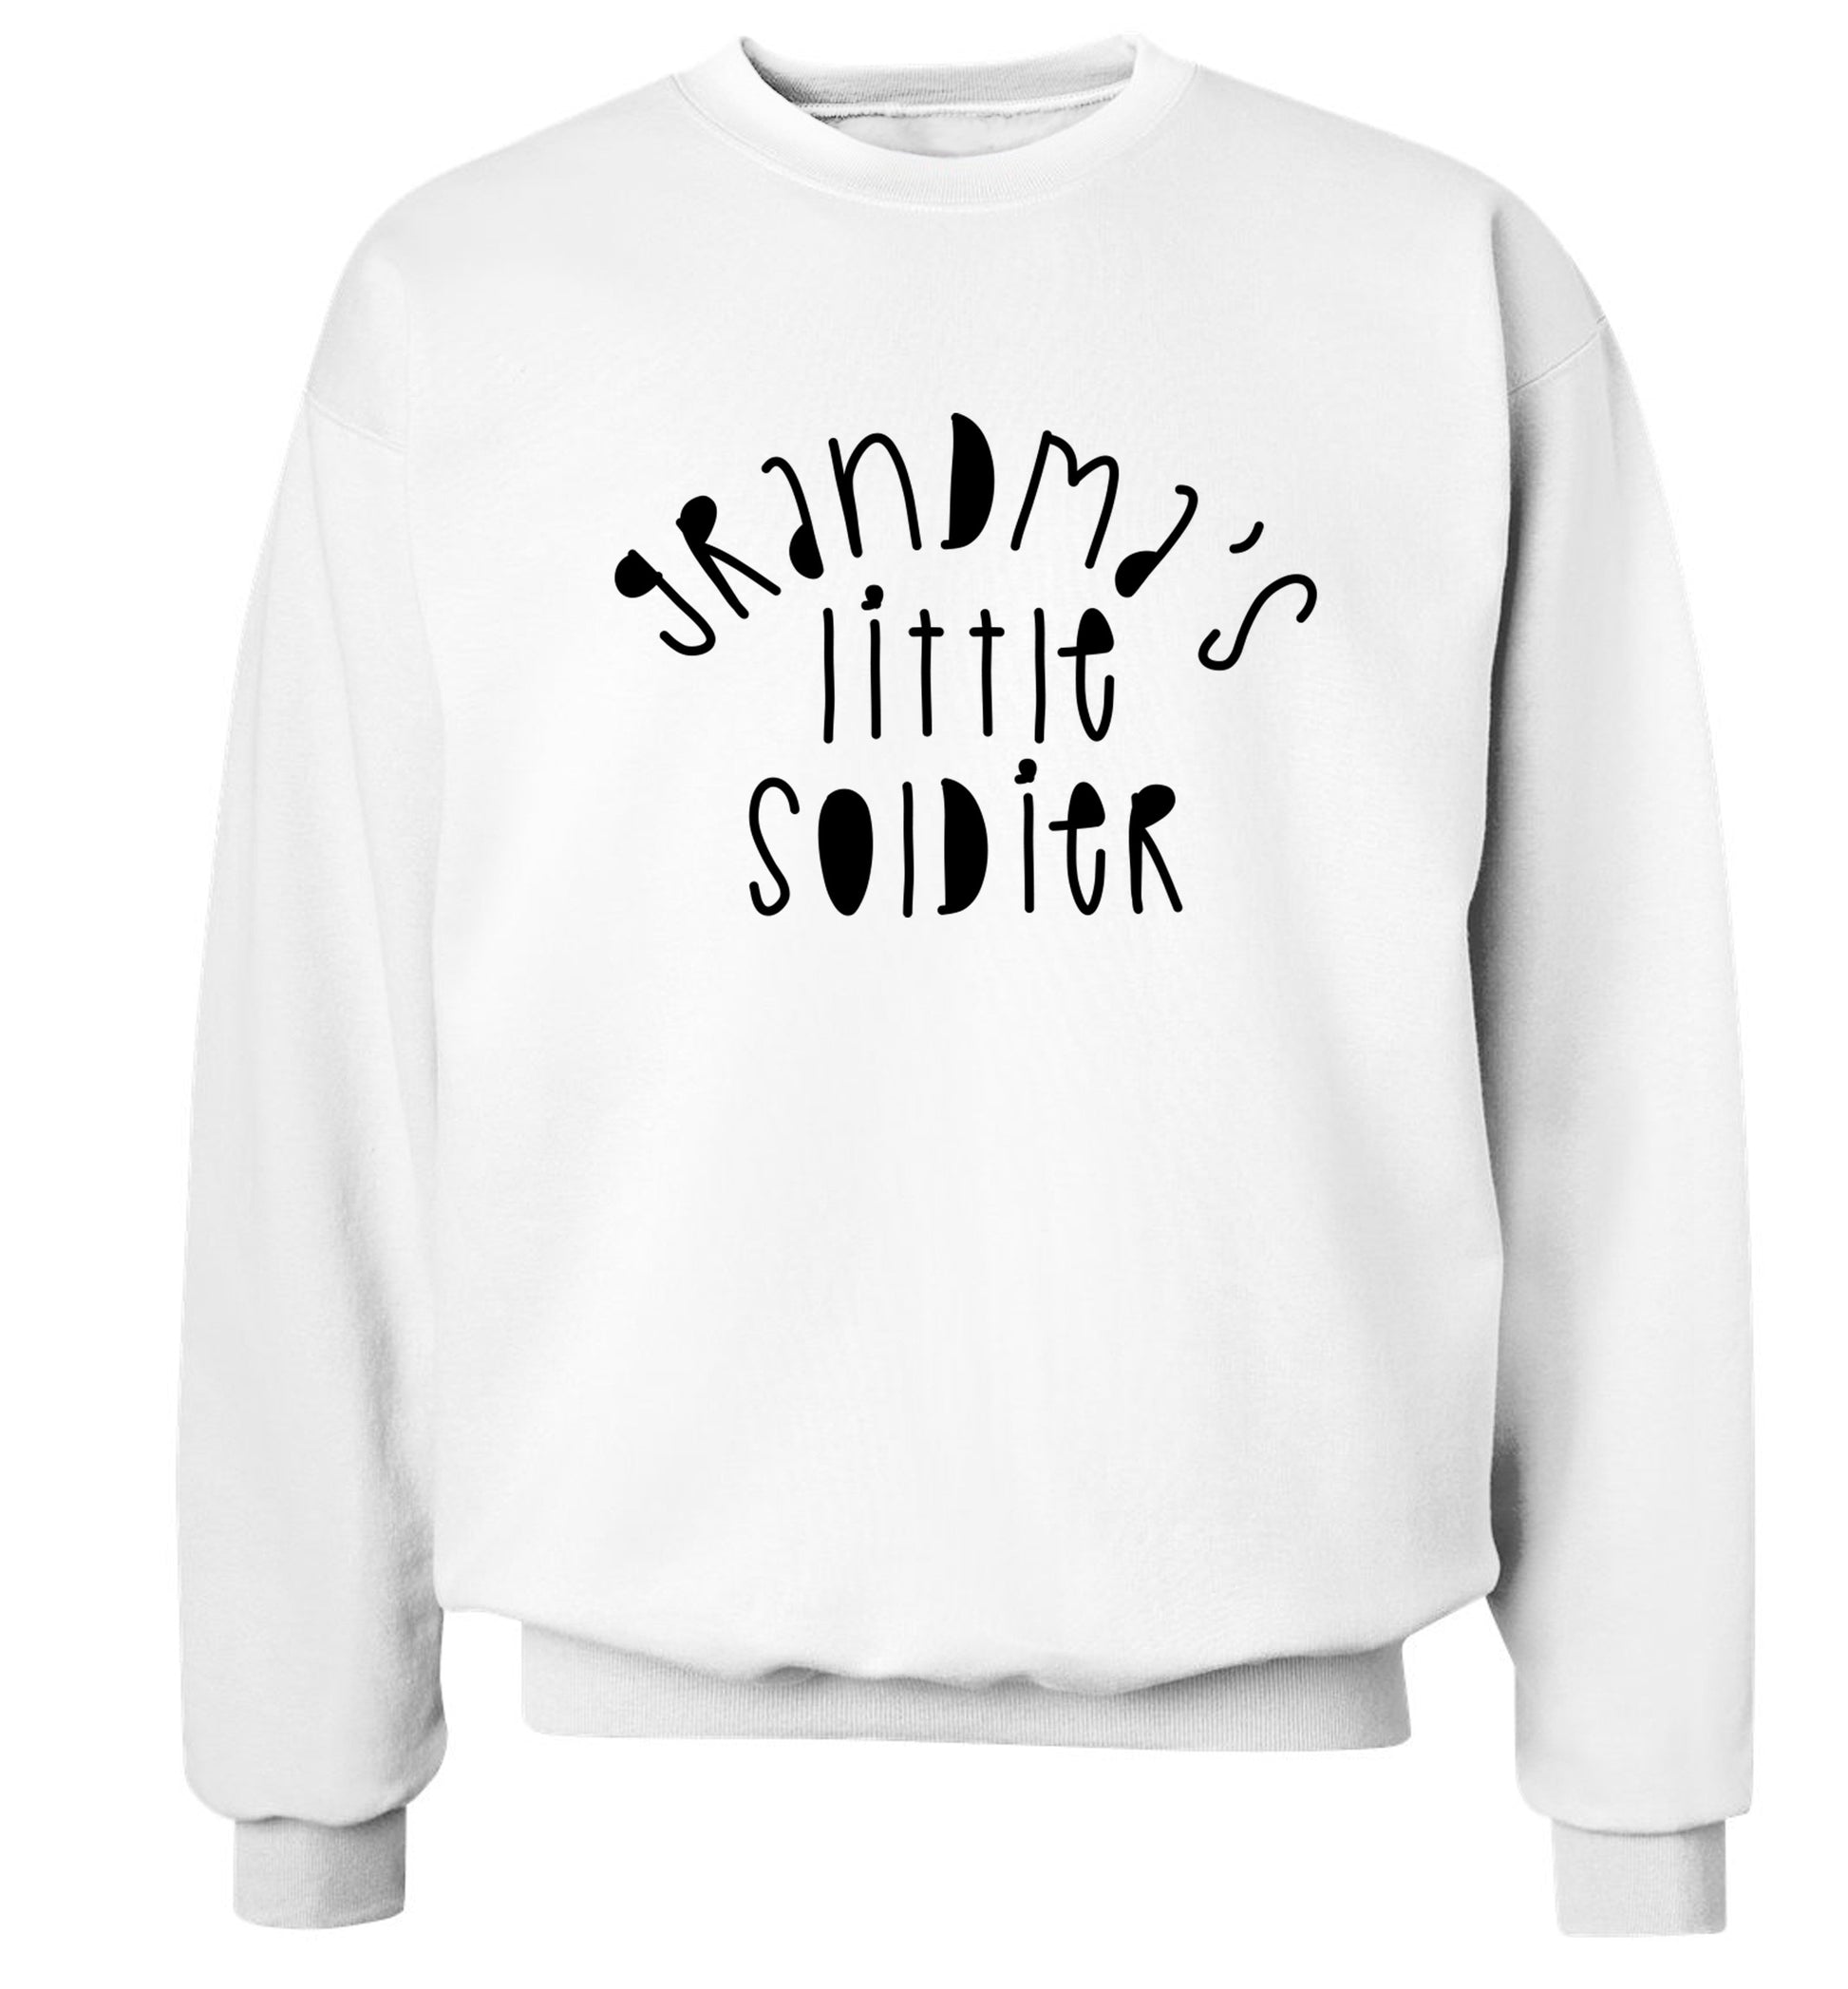 Grandma's little soldier Adult's unisex white Sweater 2XL